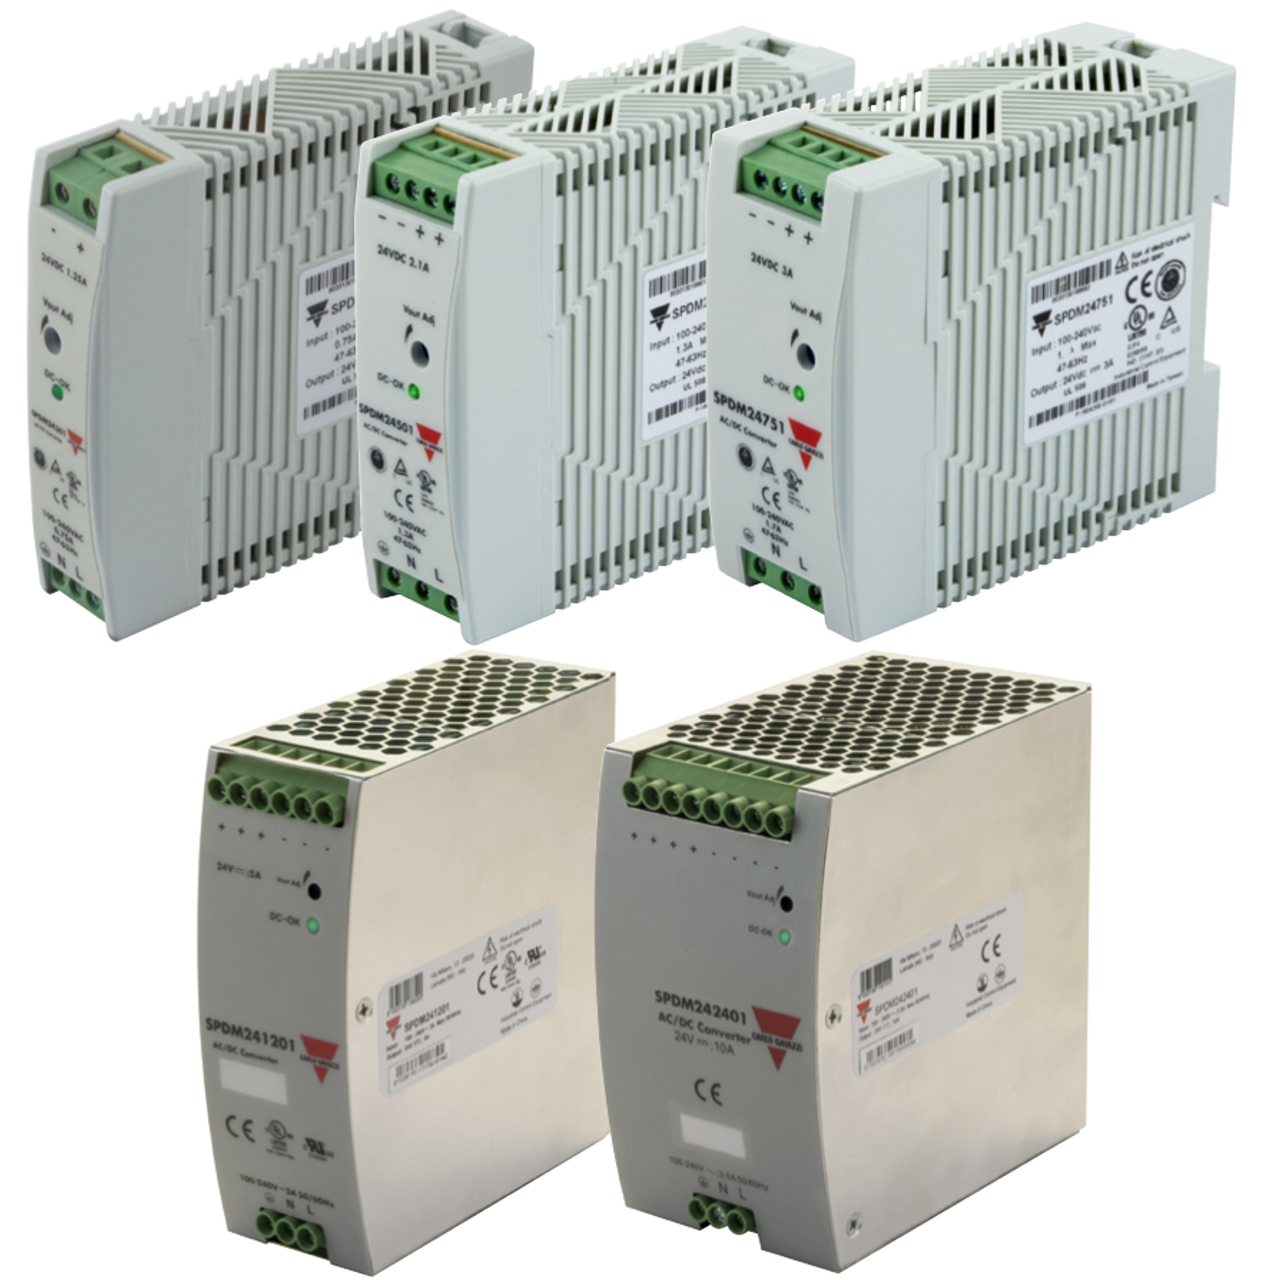 Carlo Gavazzi SPDM24751B Switching Power Supplies